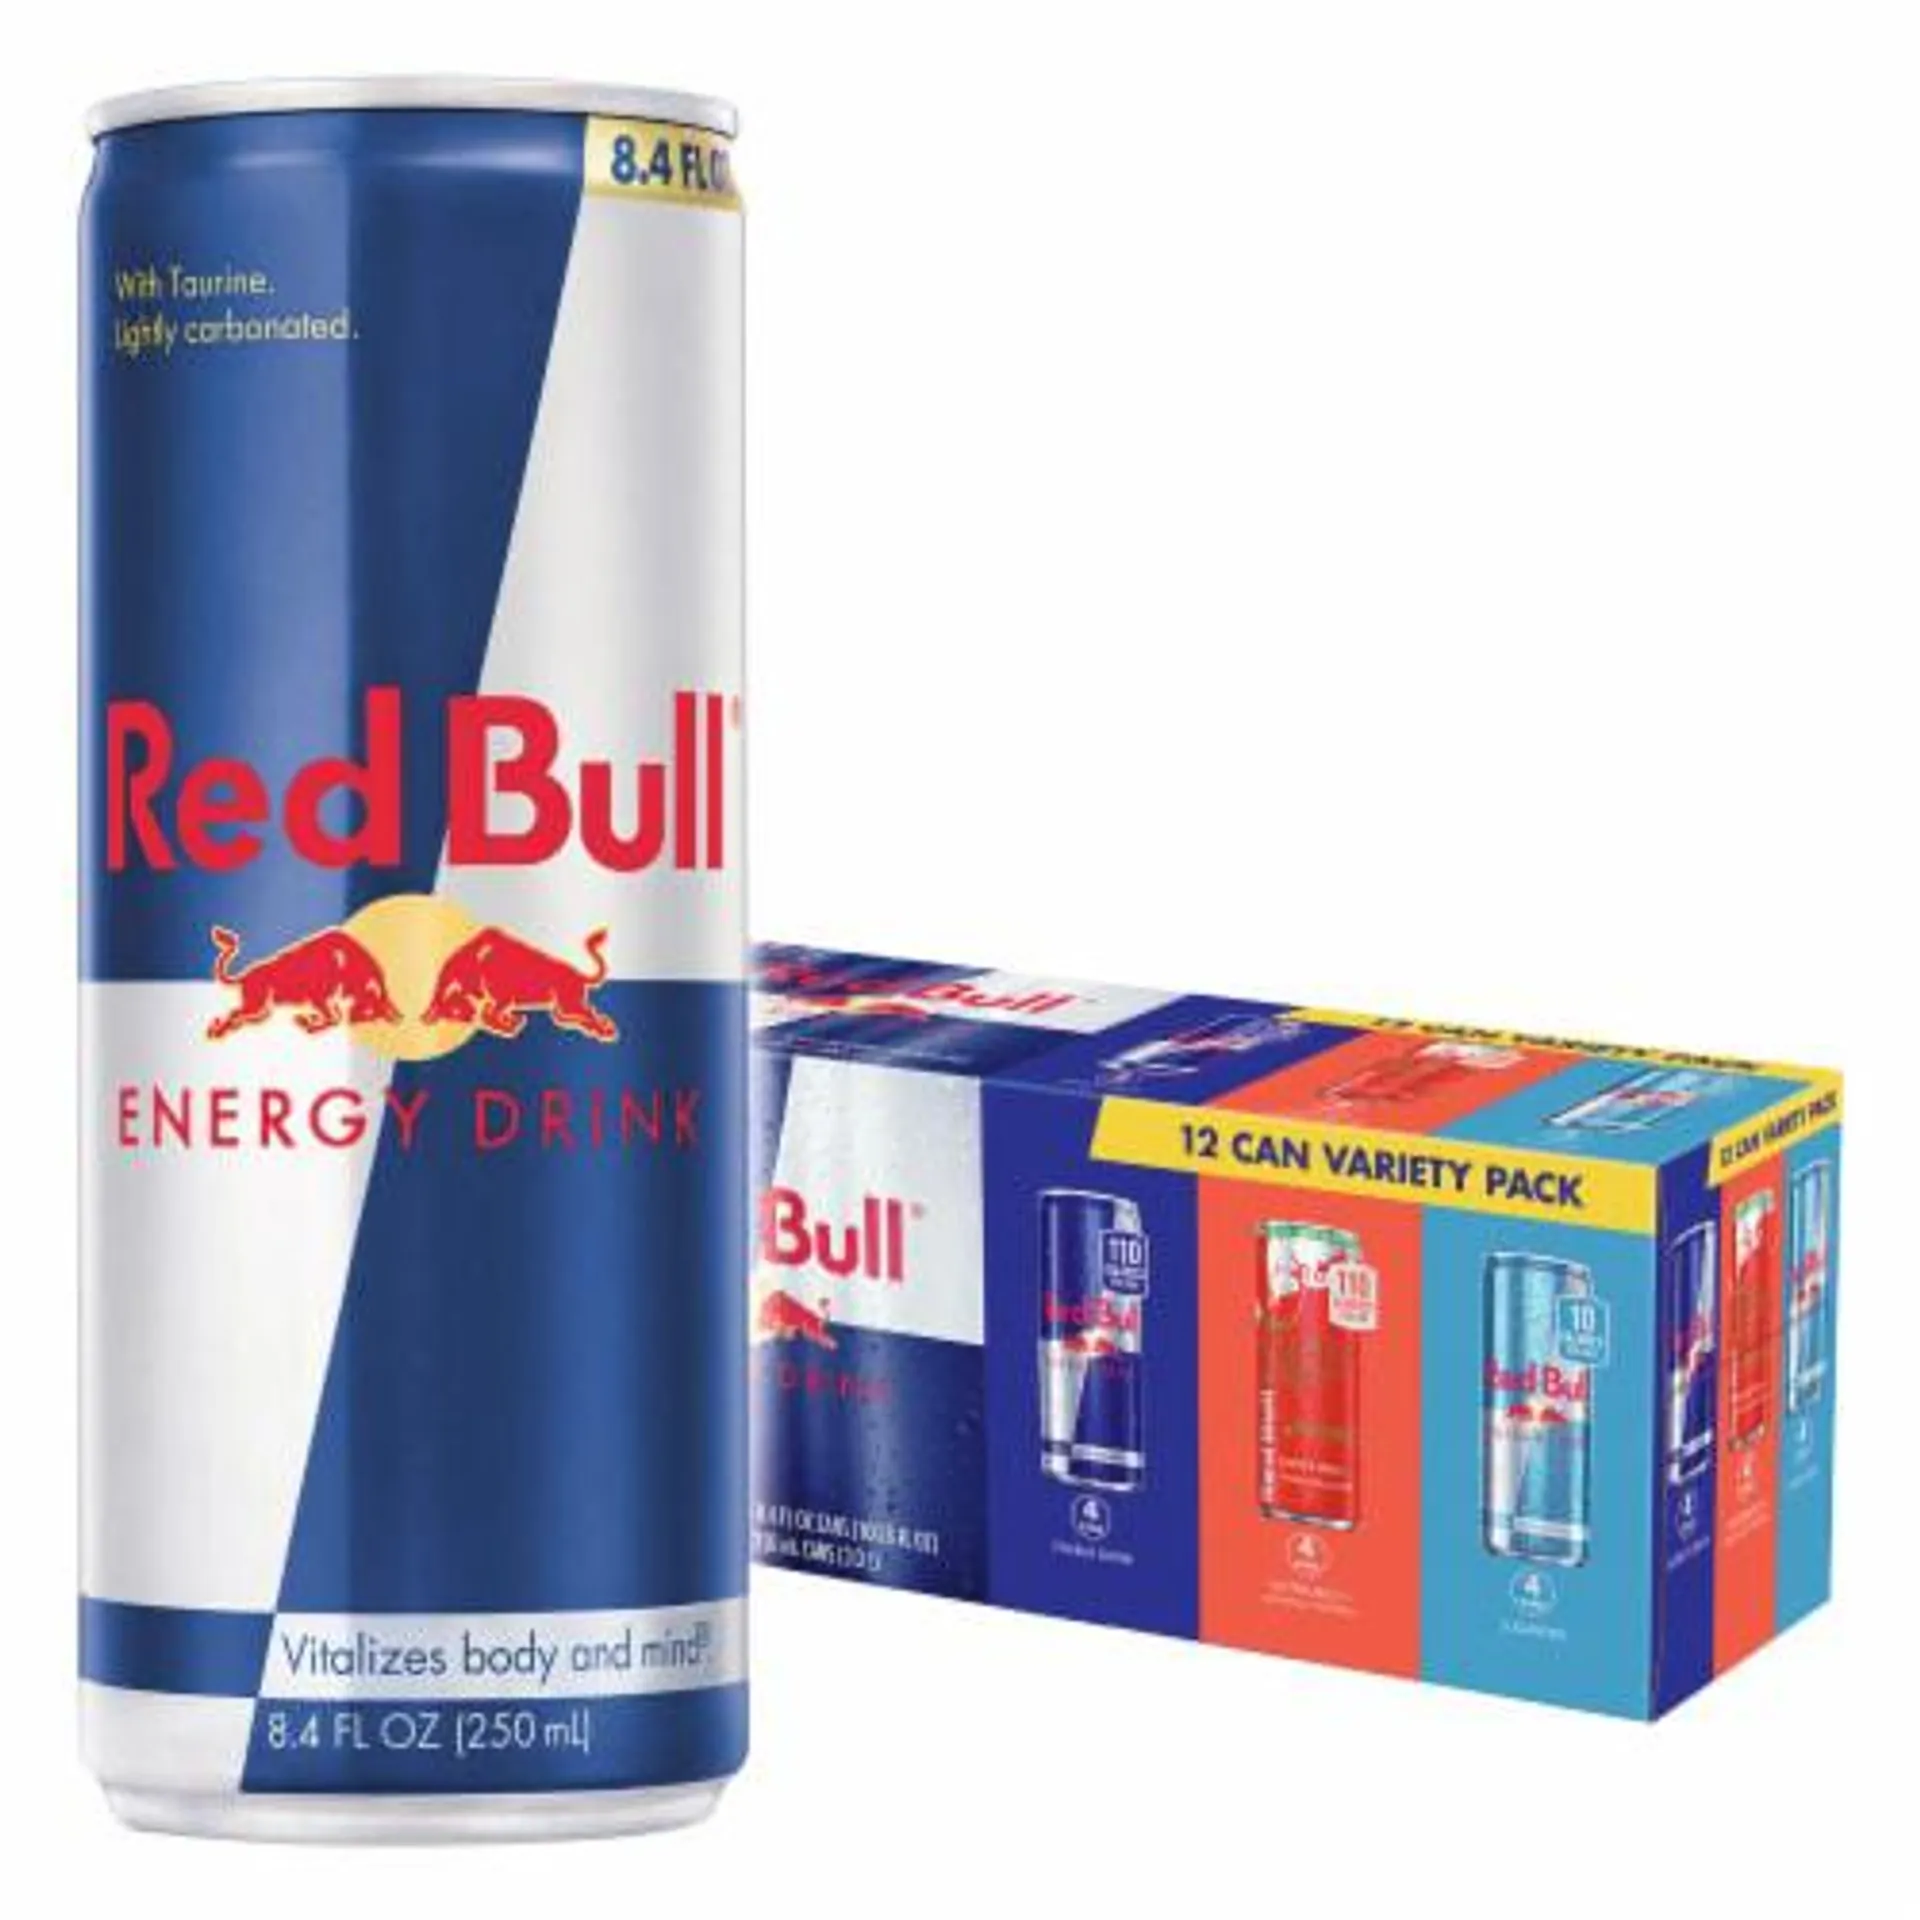 Red Bull Energy Drink Variety Pack